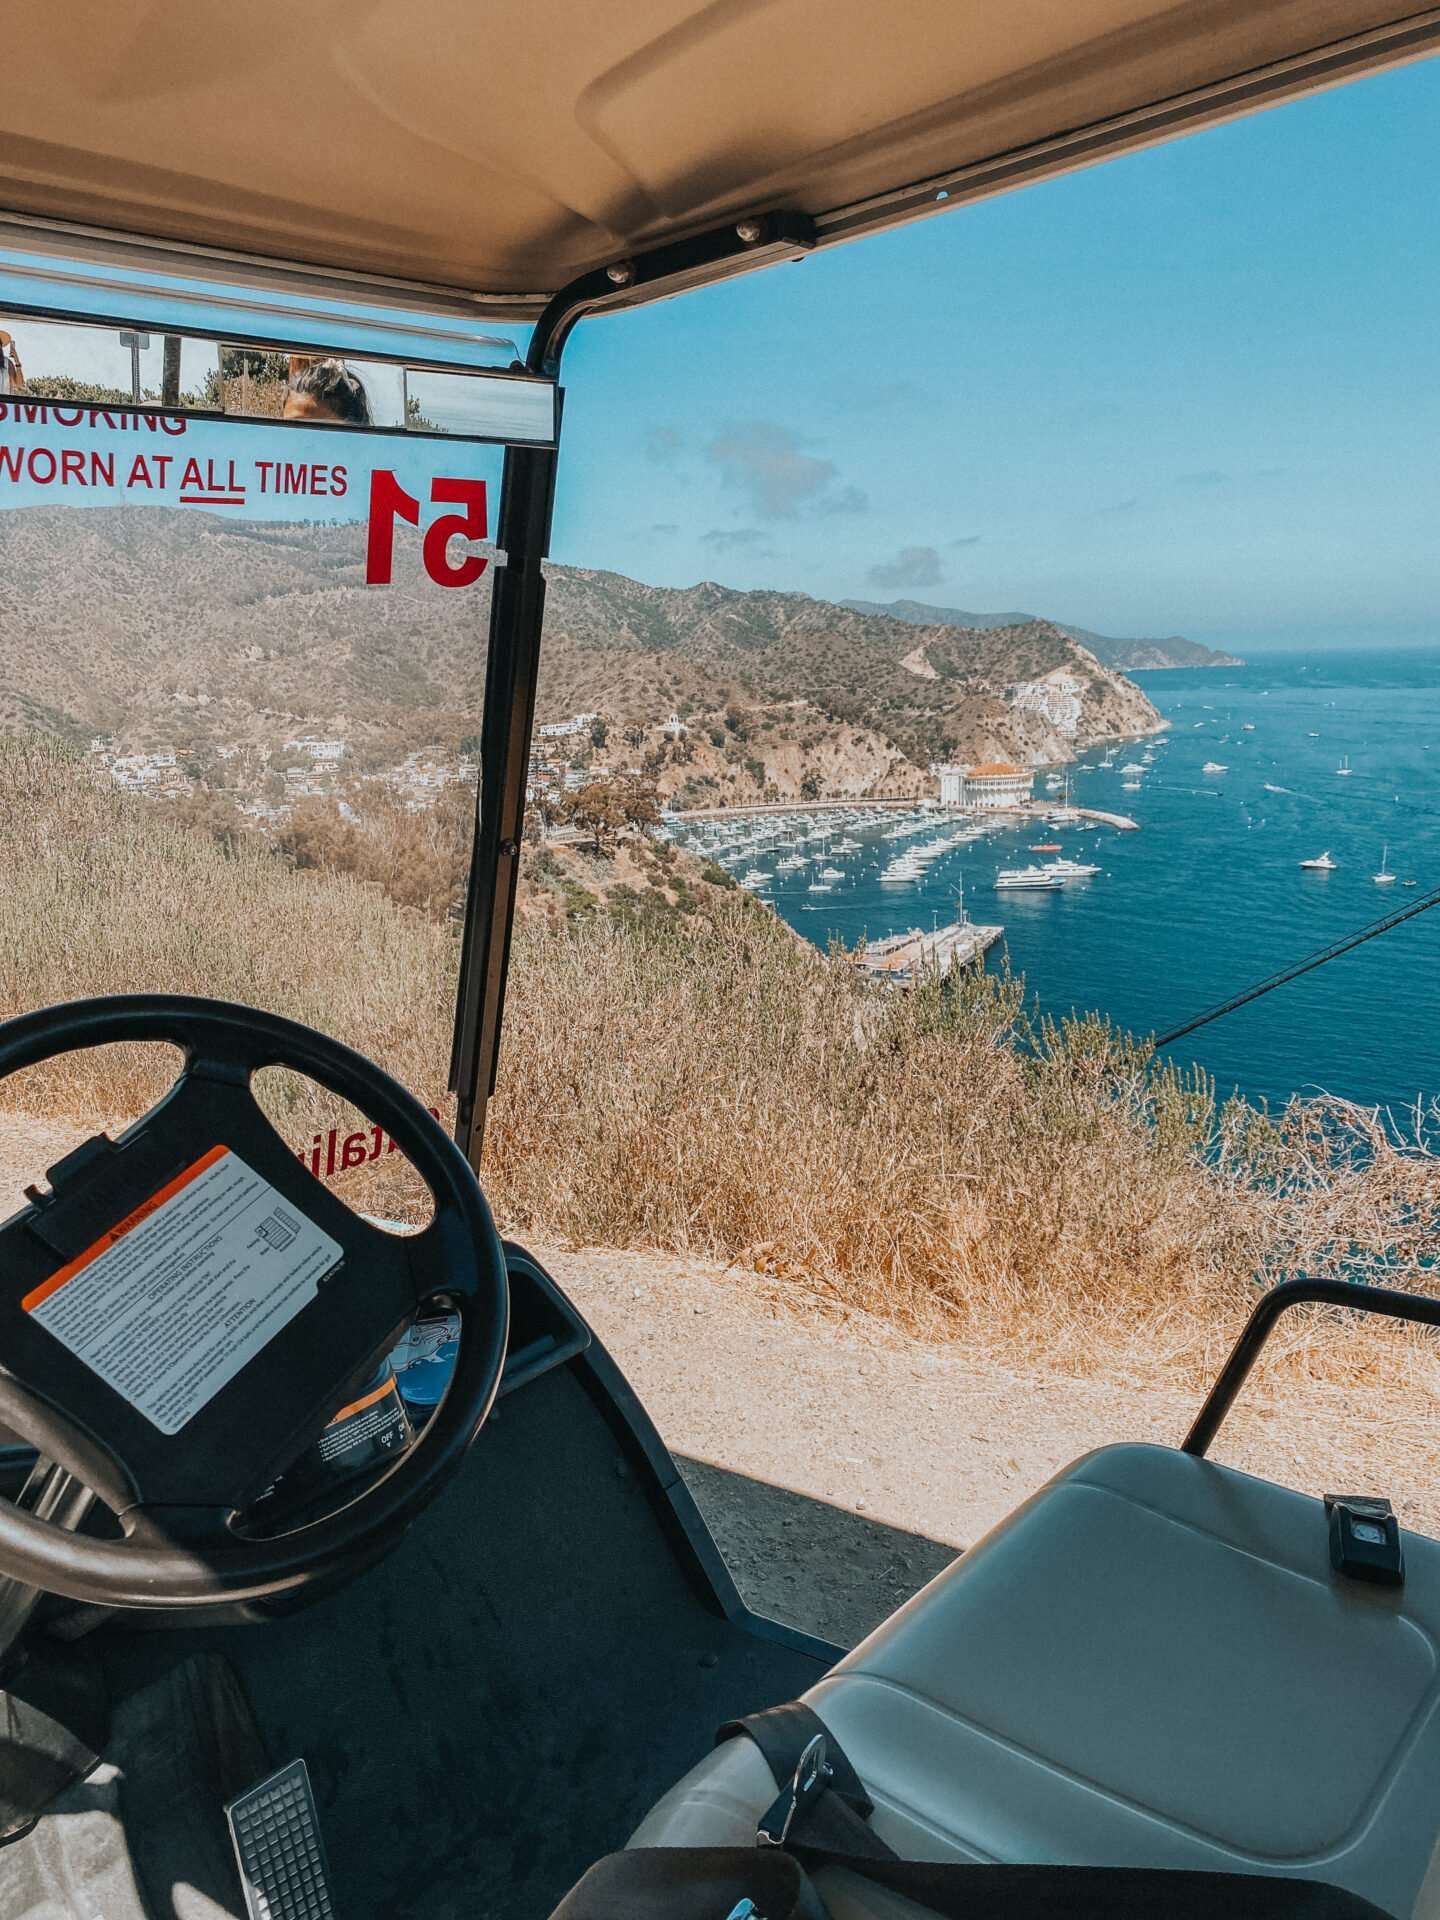 Golf cart rental Catalina Island - Palm Trees and Pellegrino California travel tips